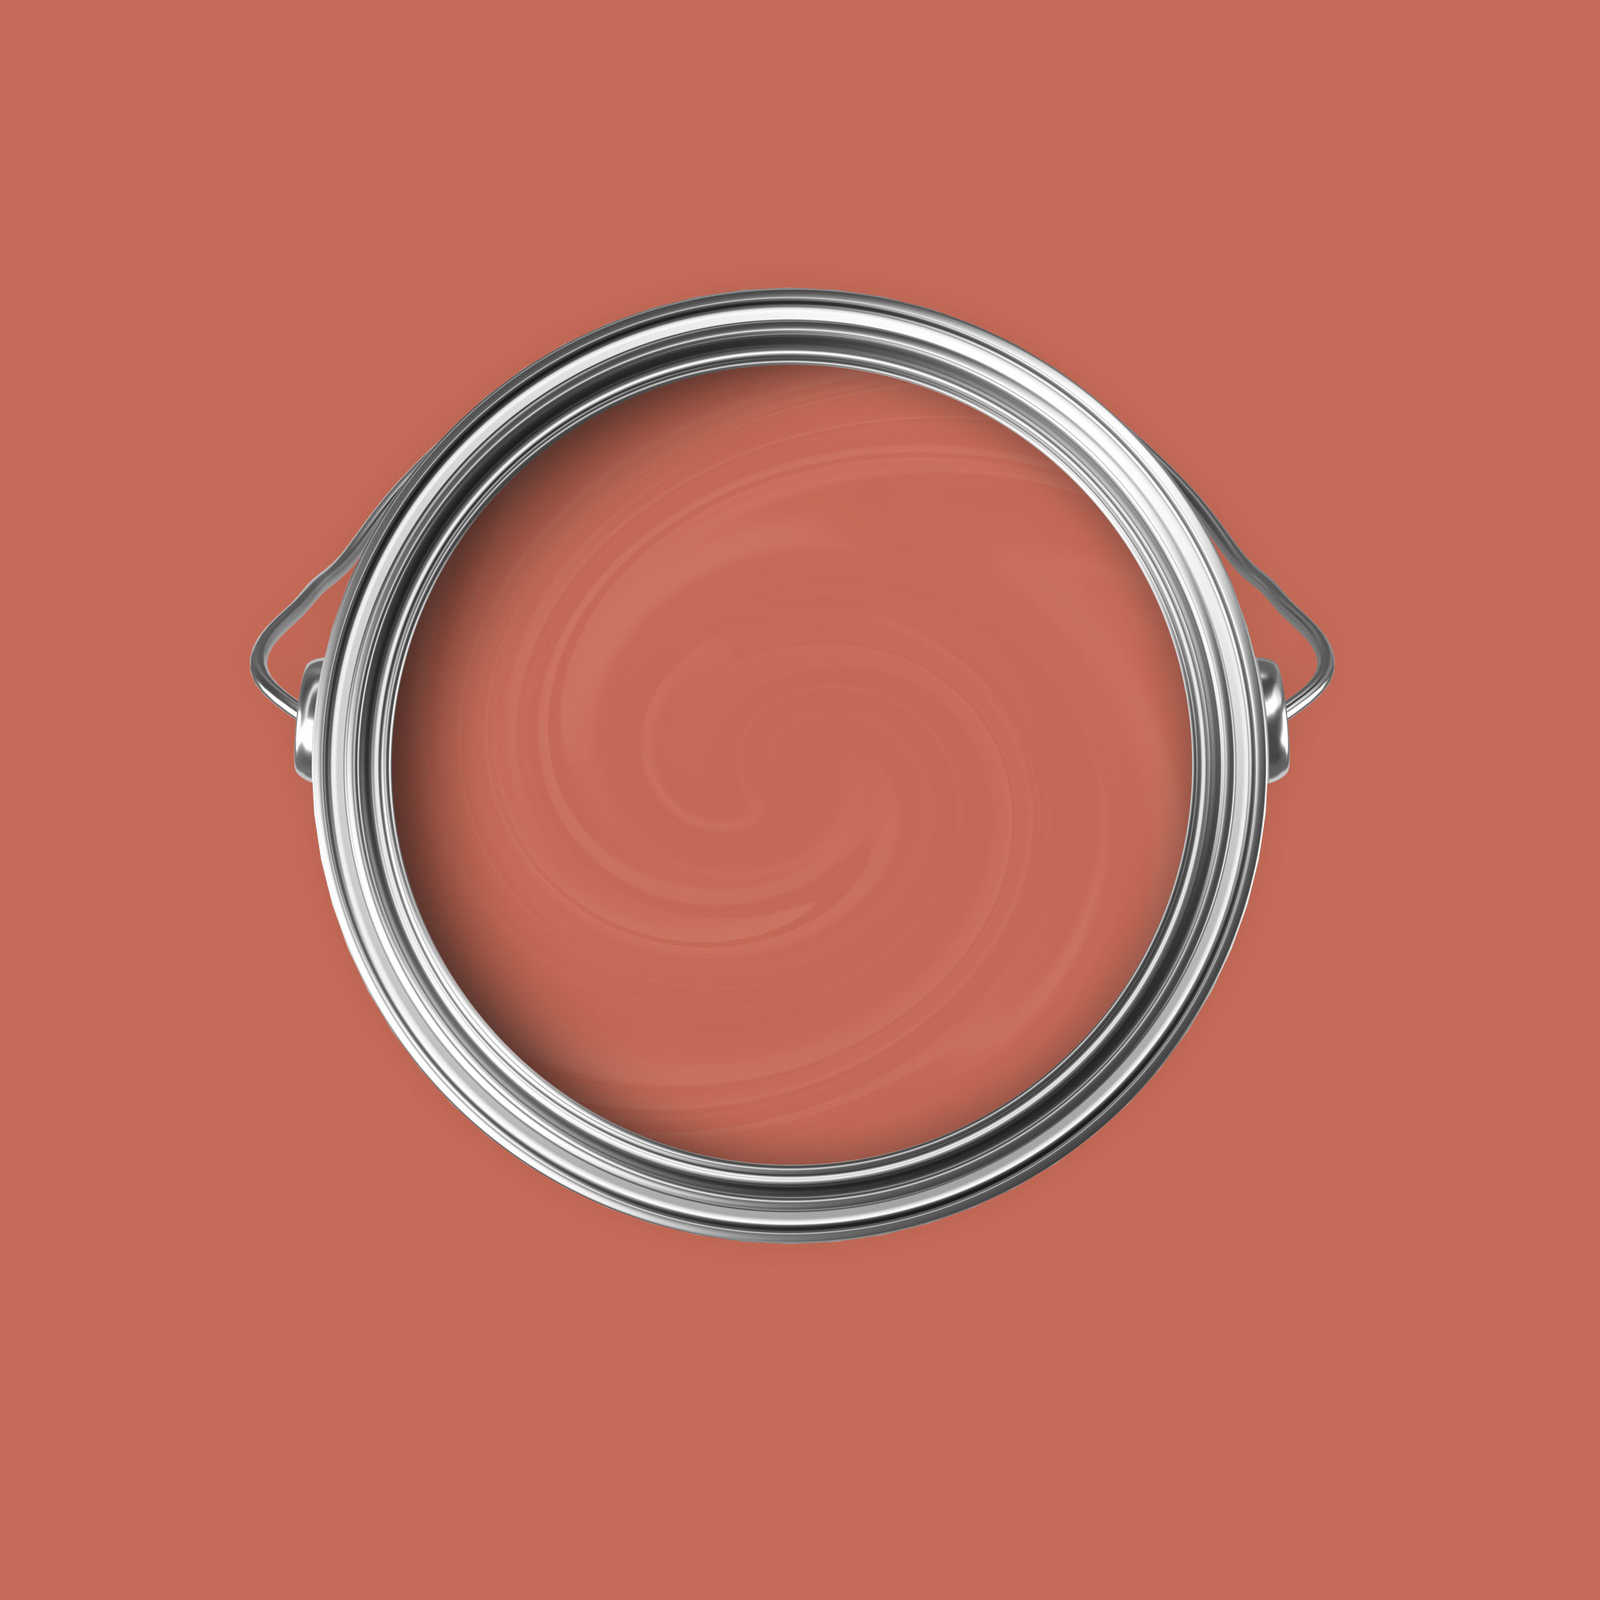             Premium Wandfarbe angenehmes Blutorange »Pretty Peach« NW907 – 5 Liter
        